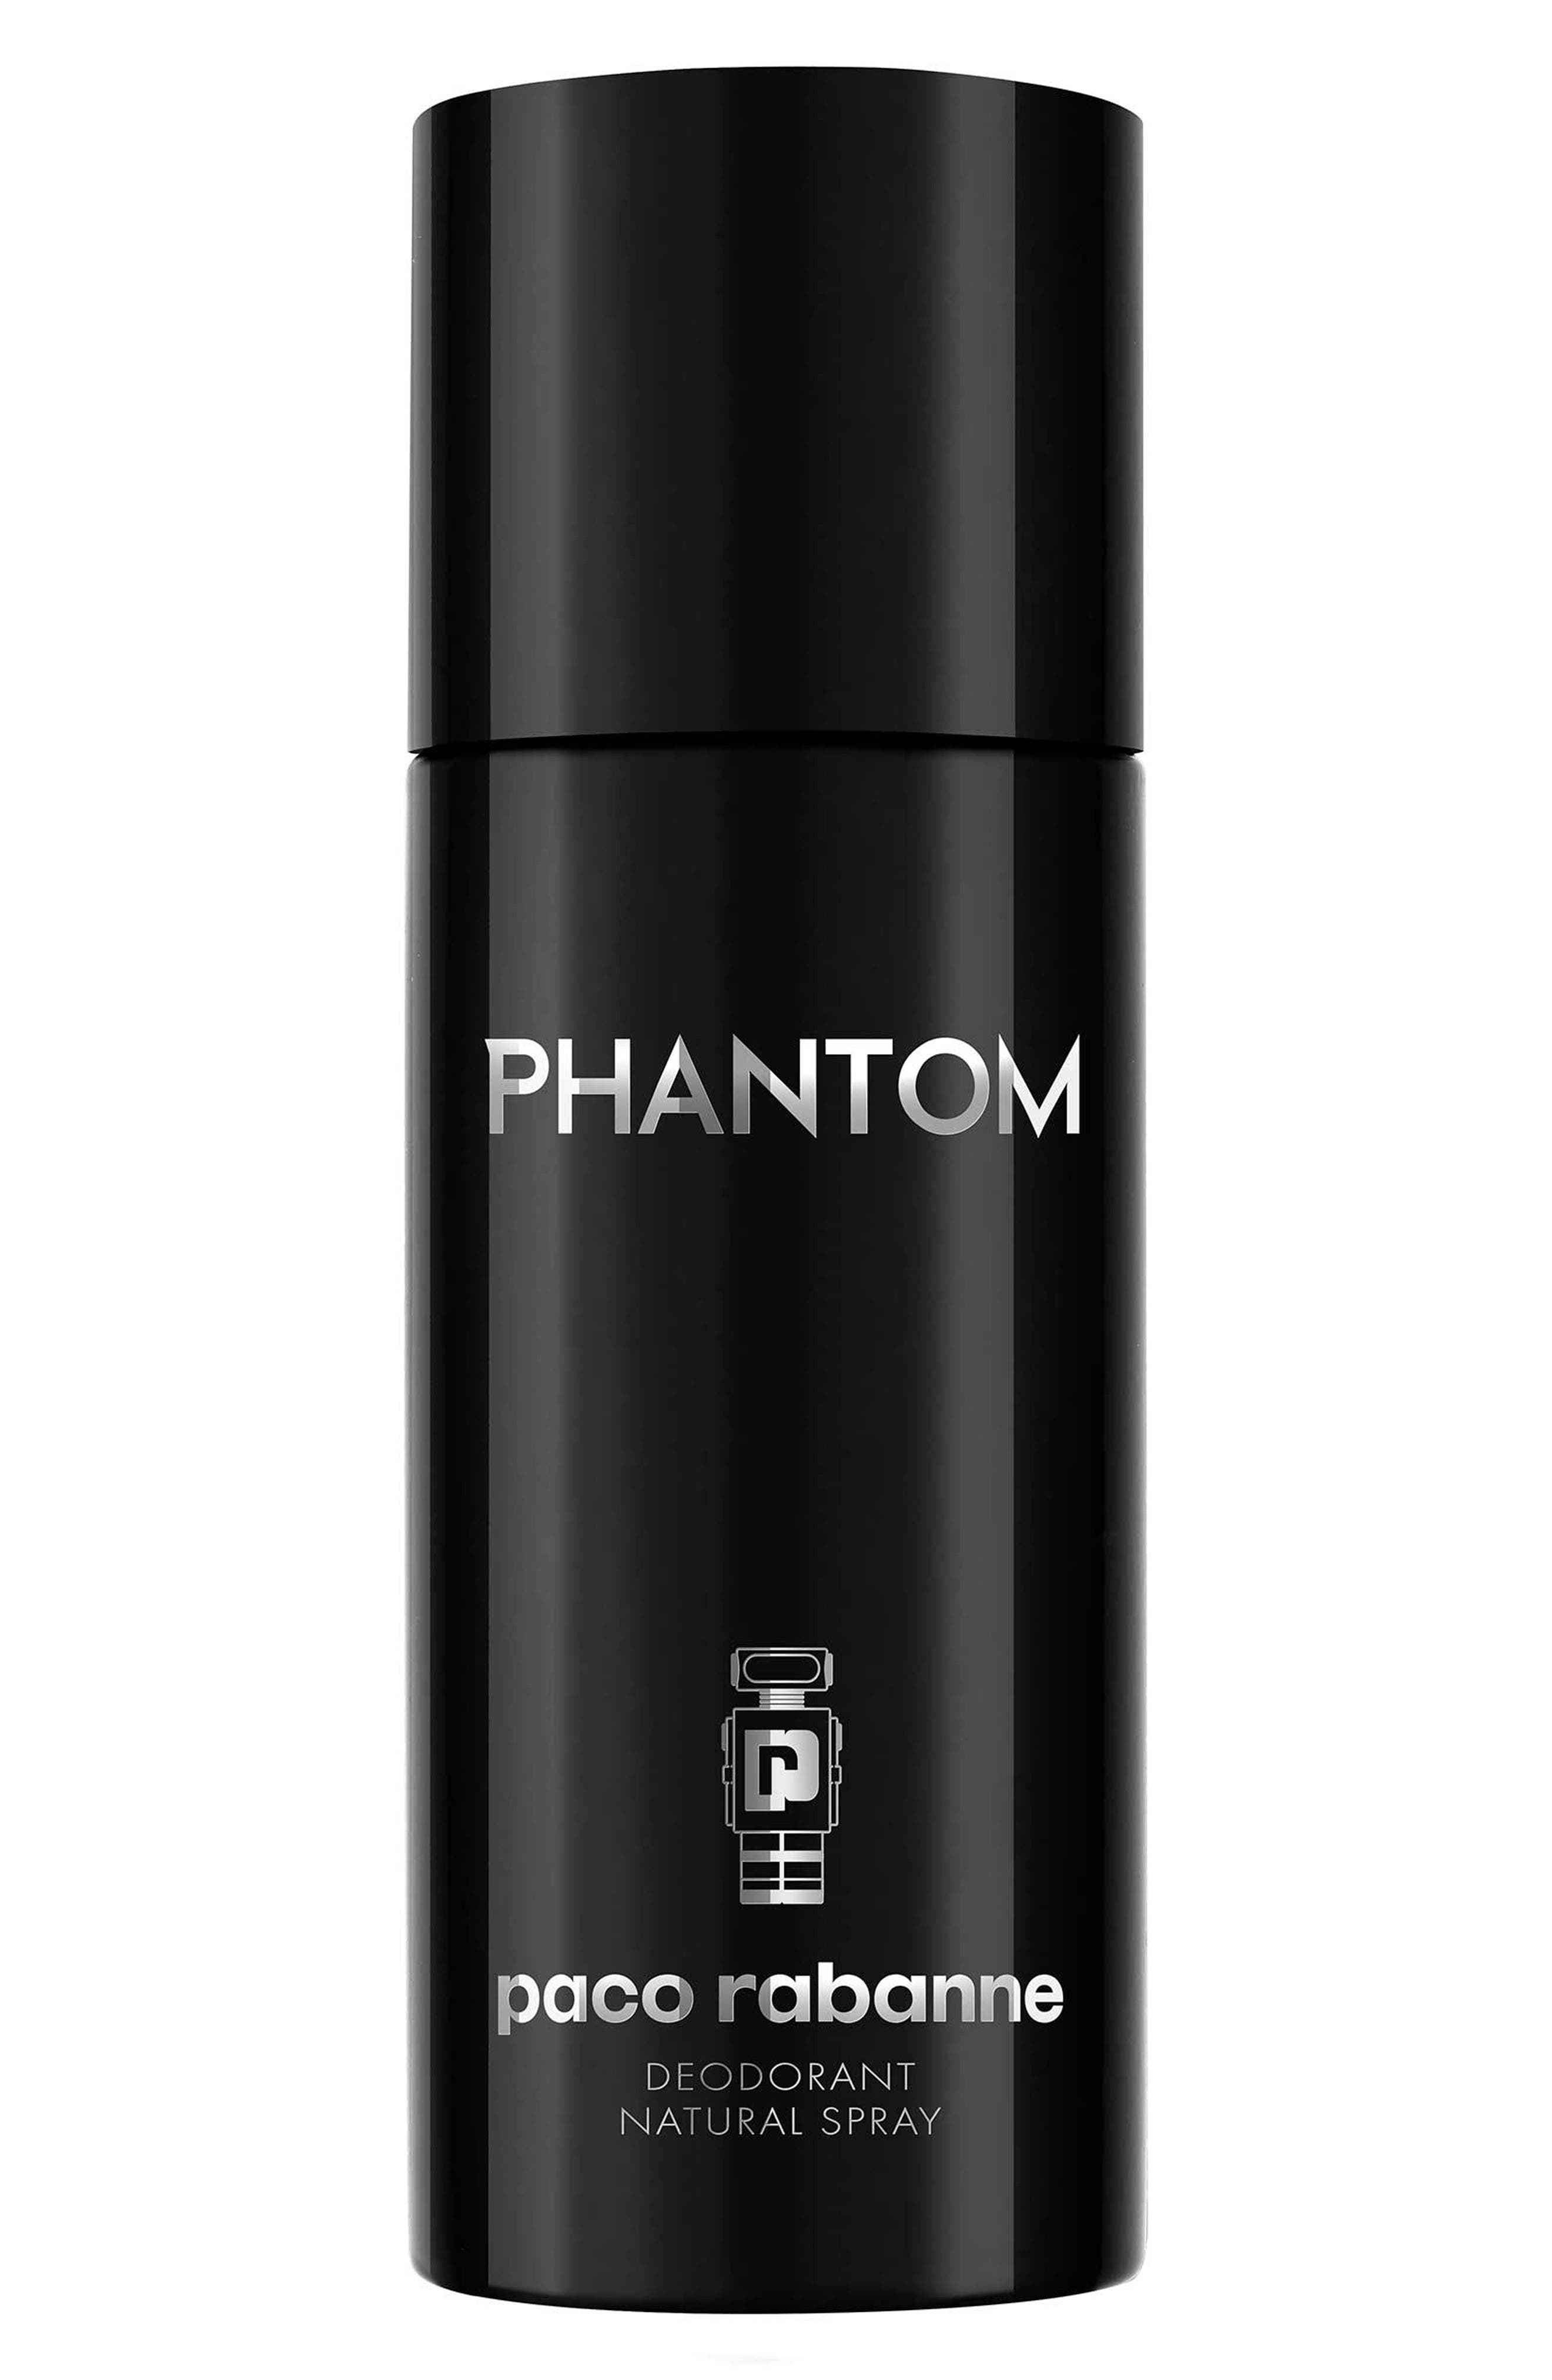 paco rabanne Phantom Deodorant Natural Spray at Nordstrom, Size 5 Oz